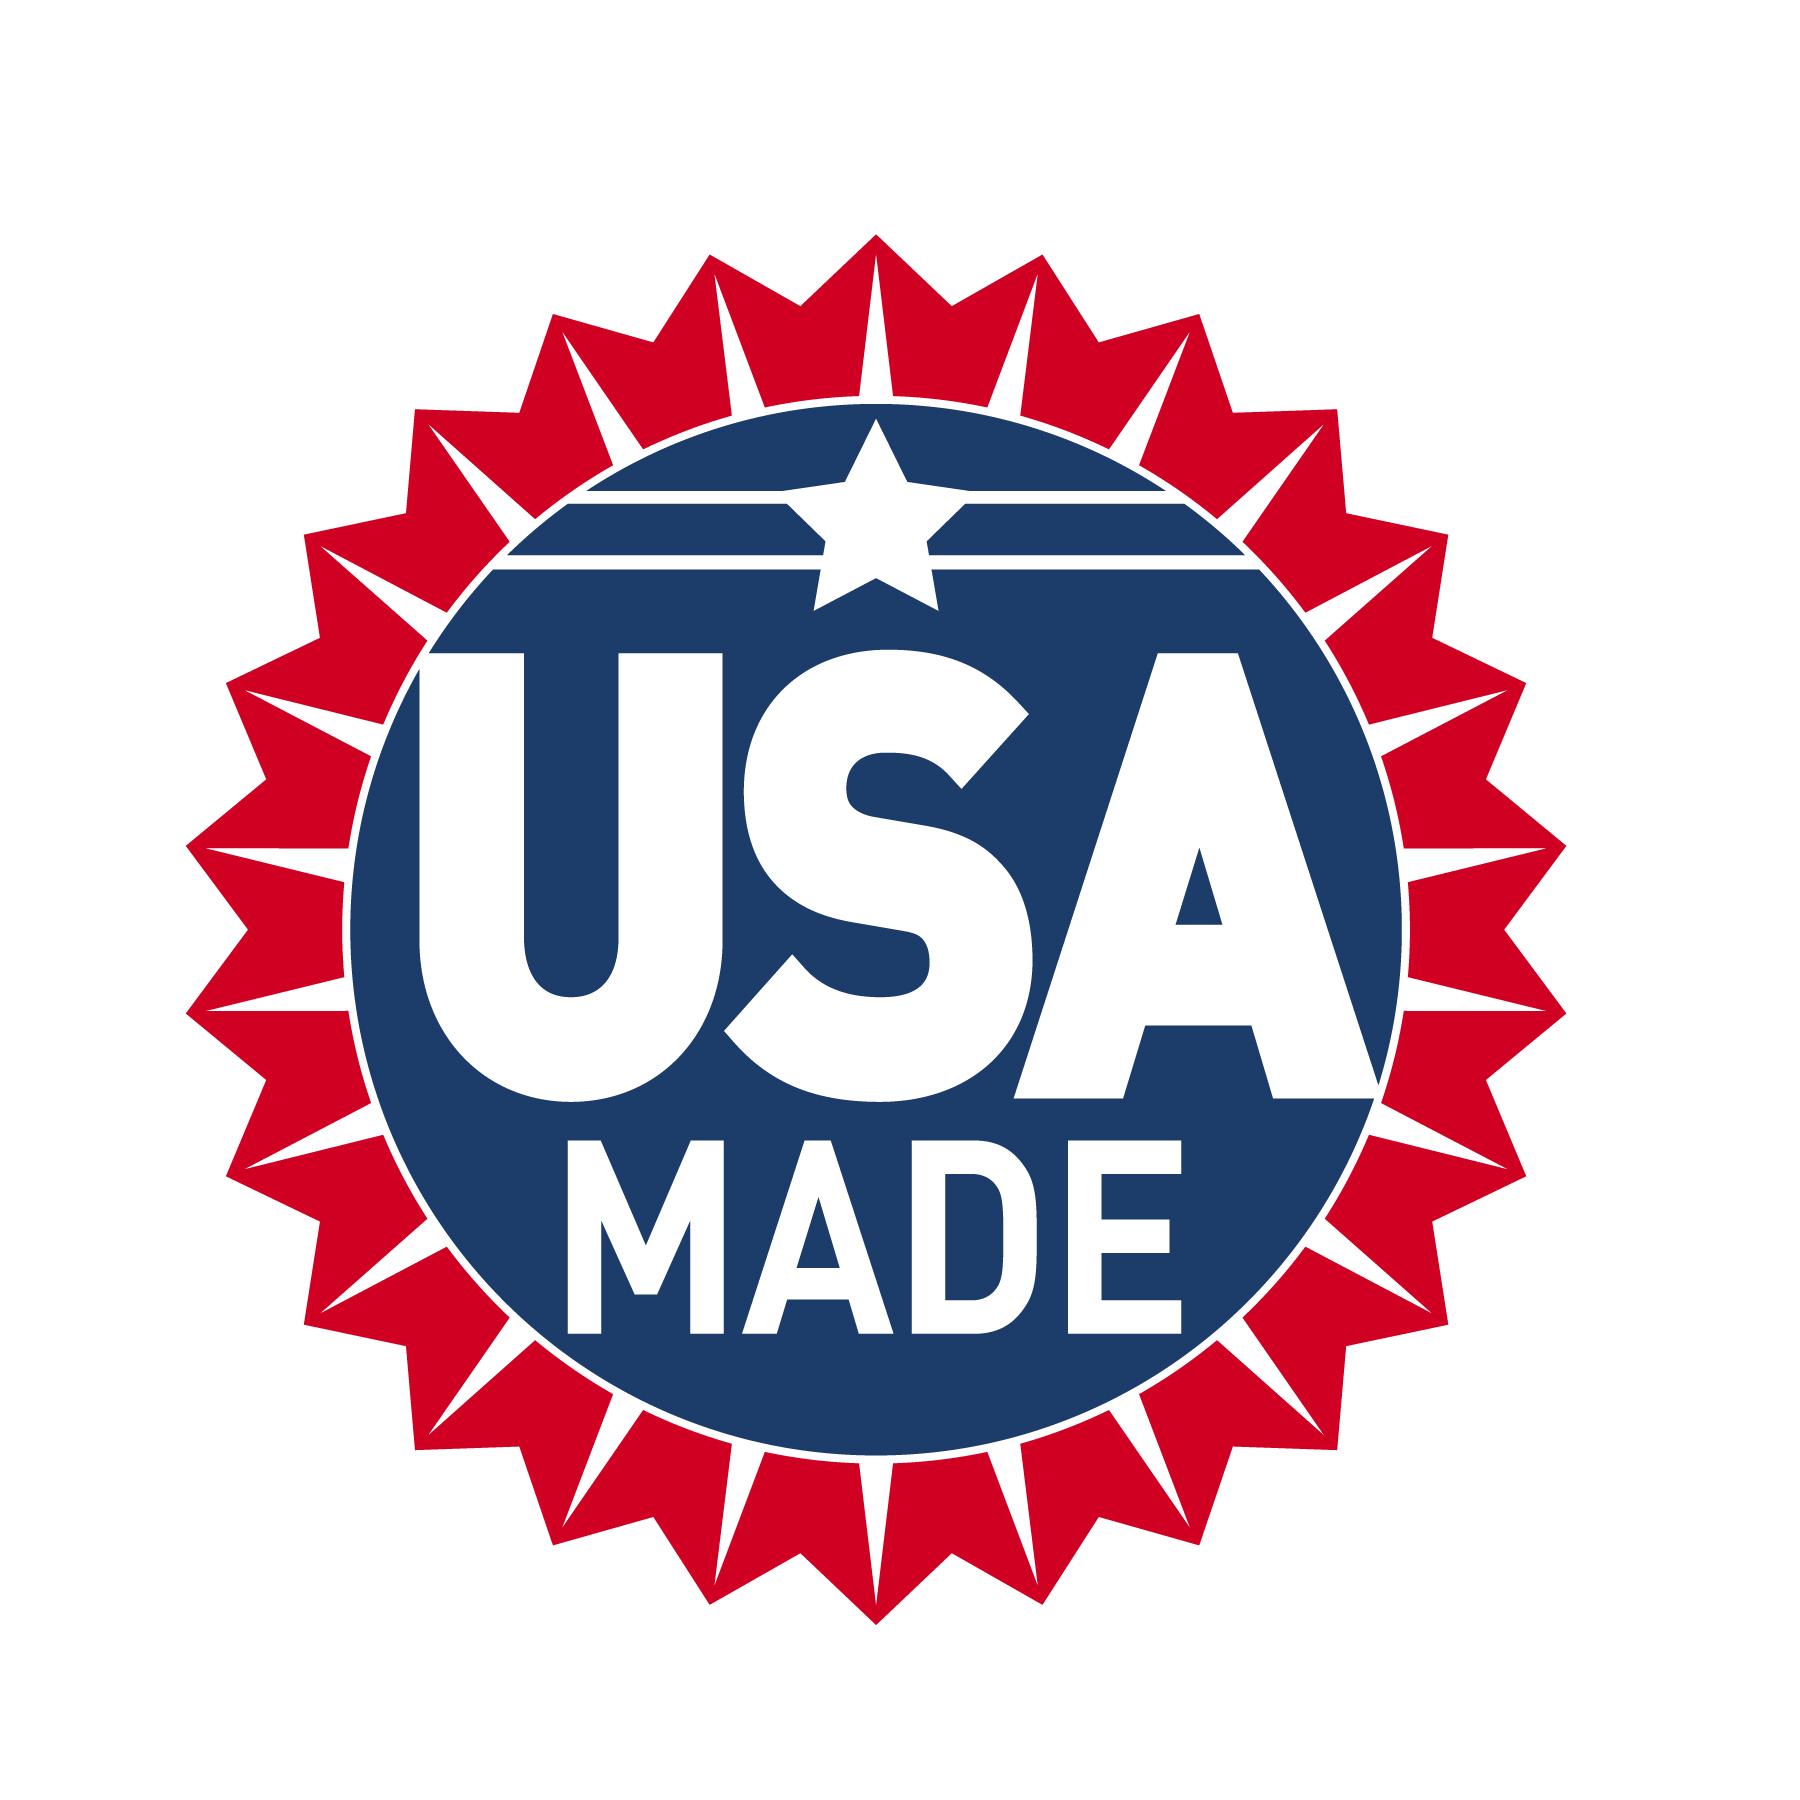 U.S.a. Logo - Made in USA Logo Design. Dowload Vector Art